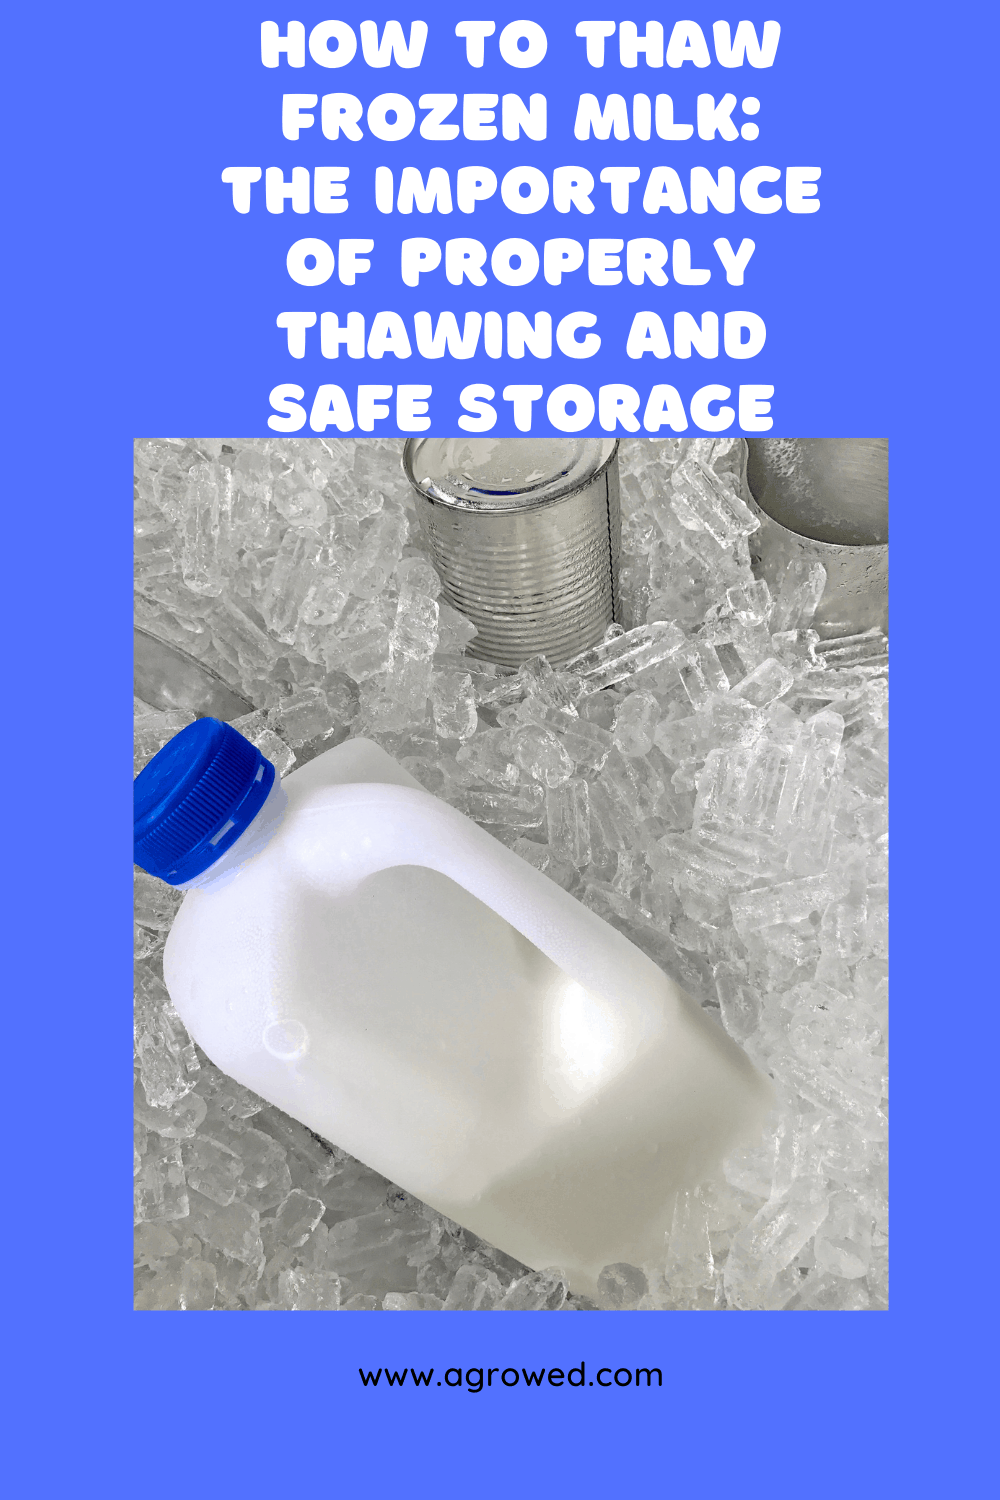 How to thaw frozen milk